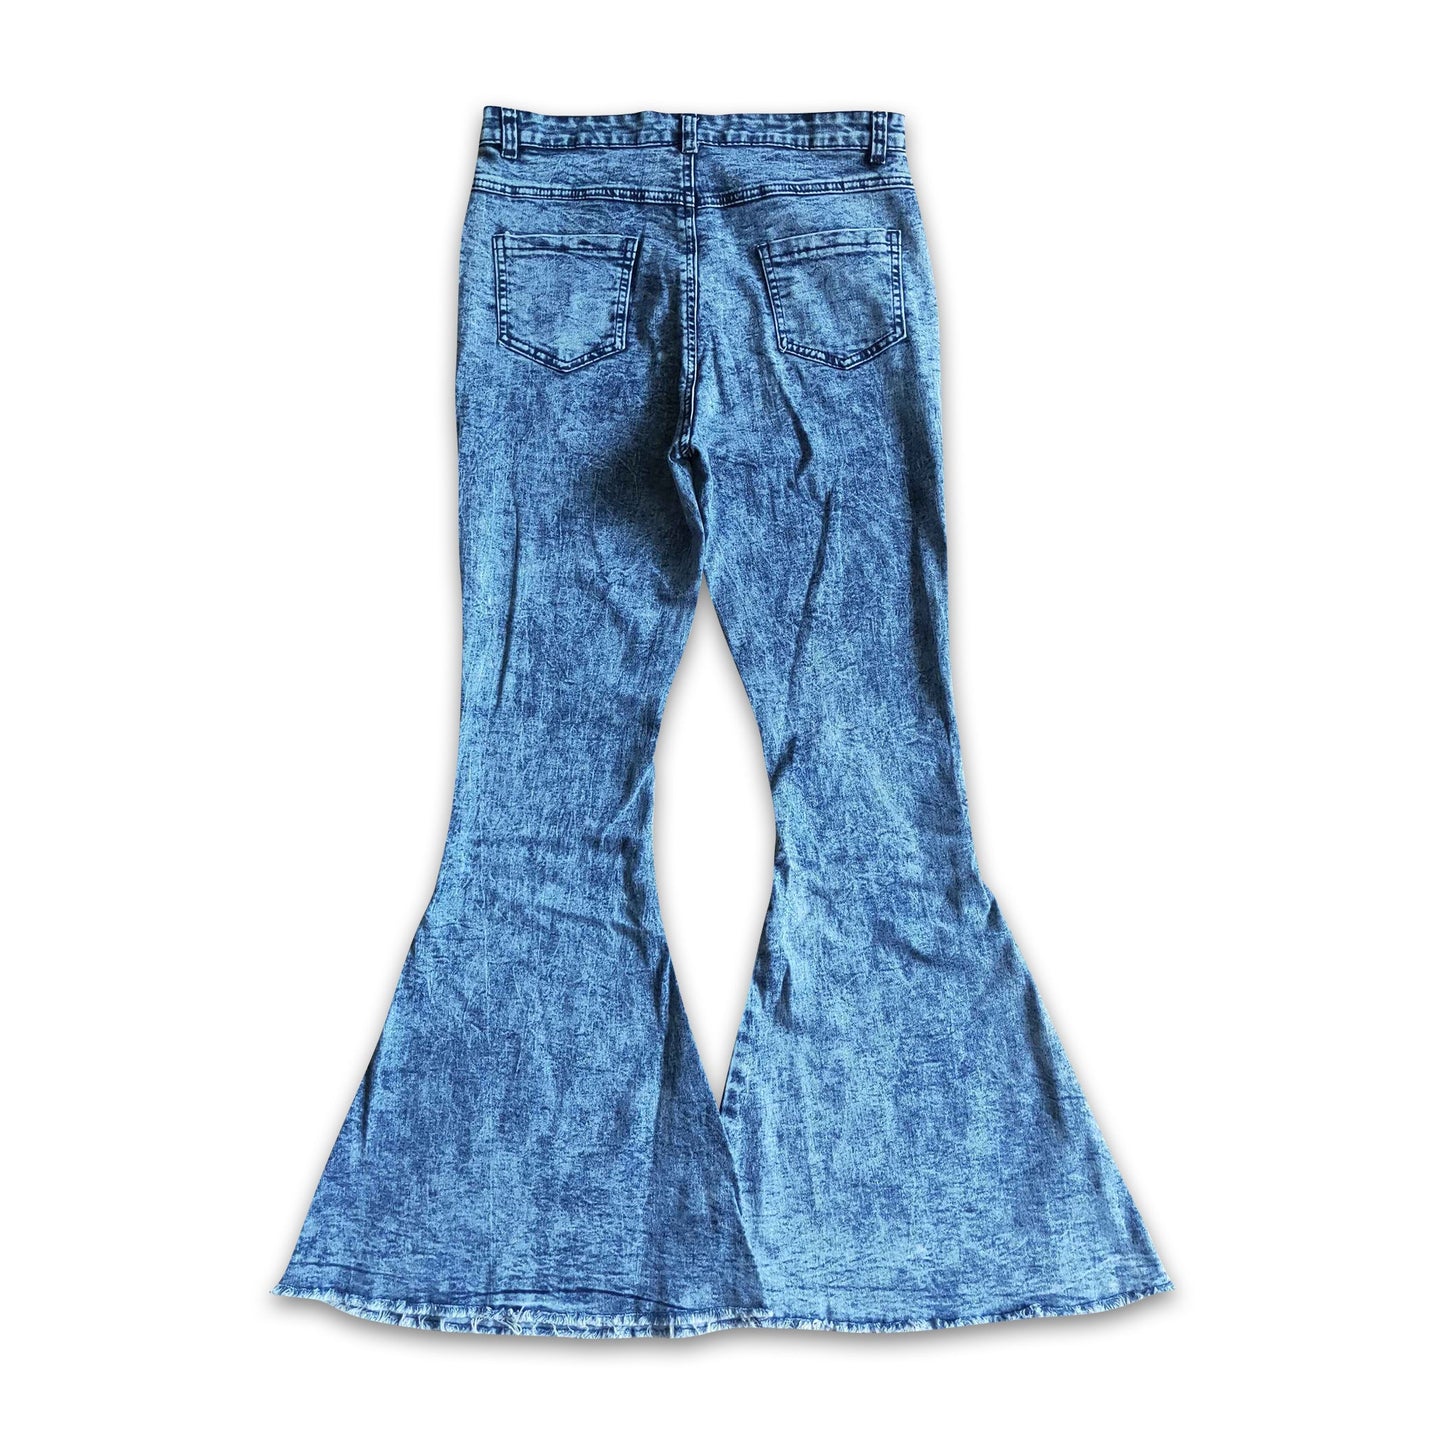 Blue bell bottom women denim pants adult jeans